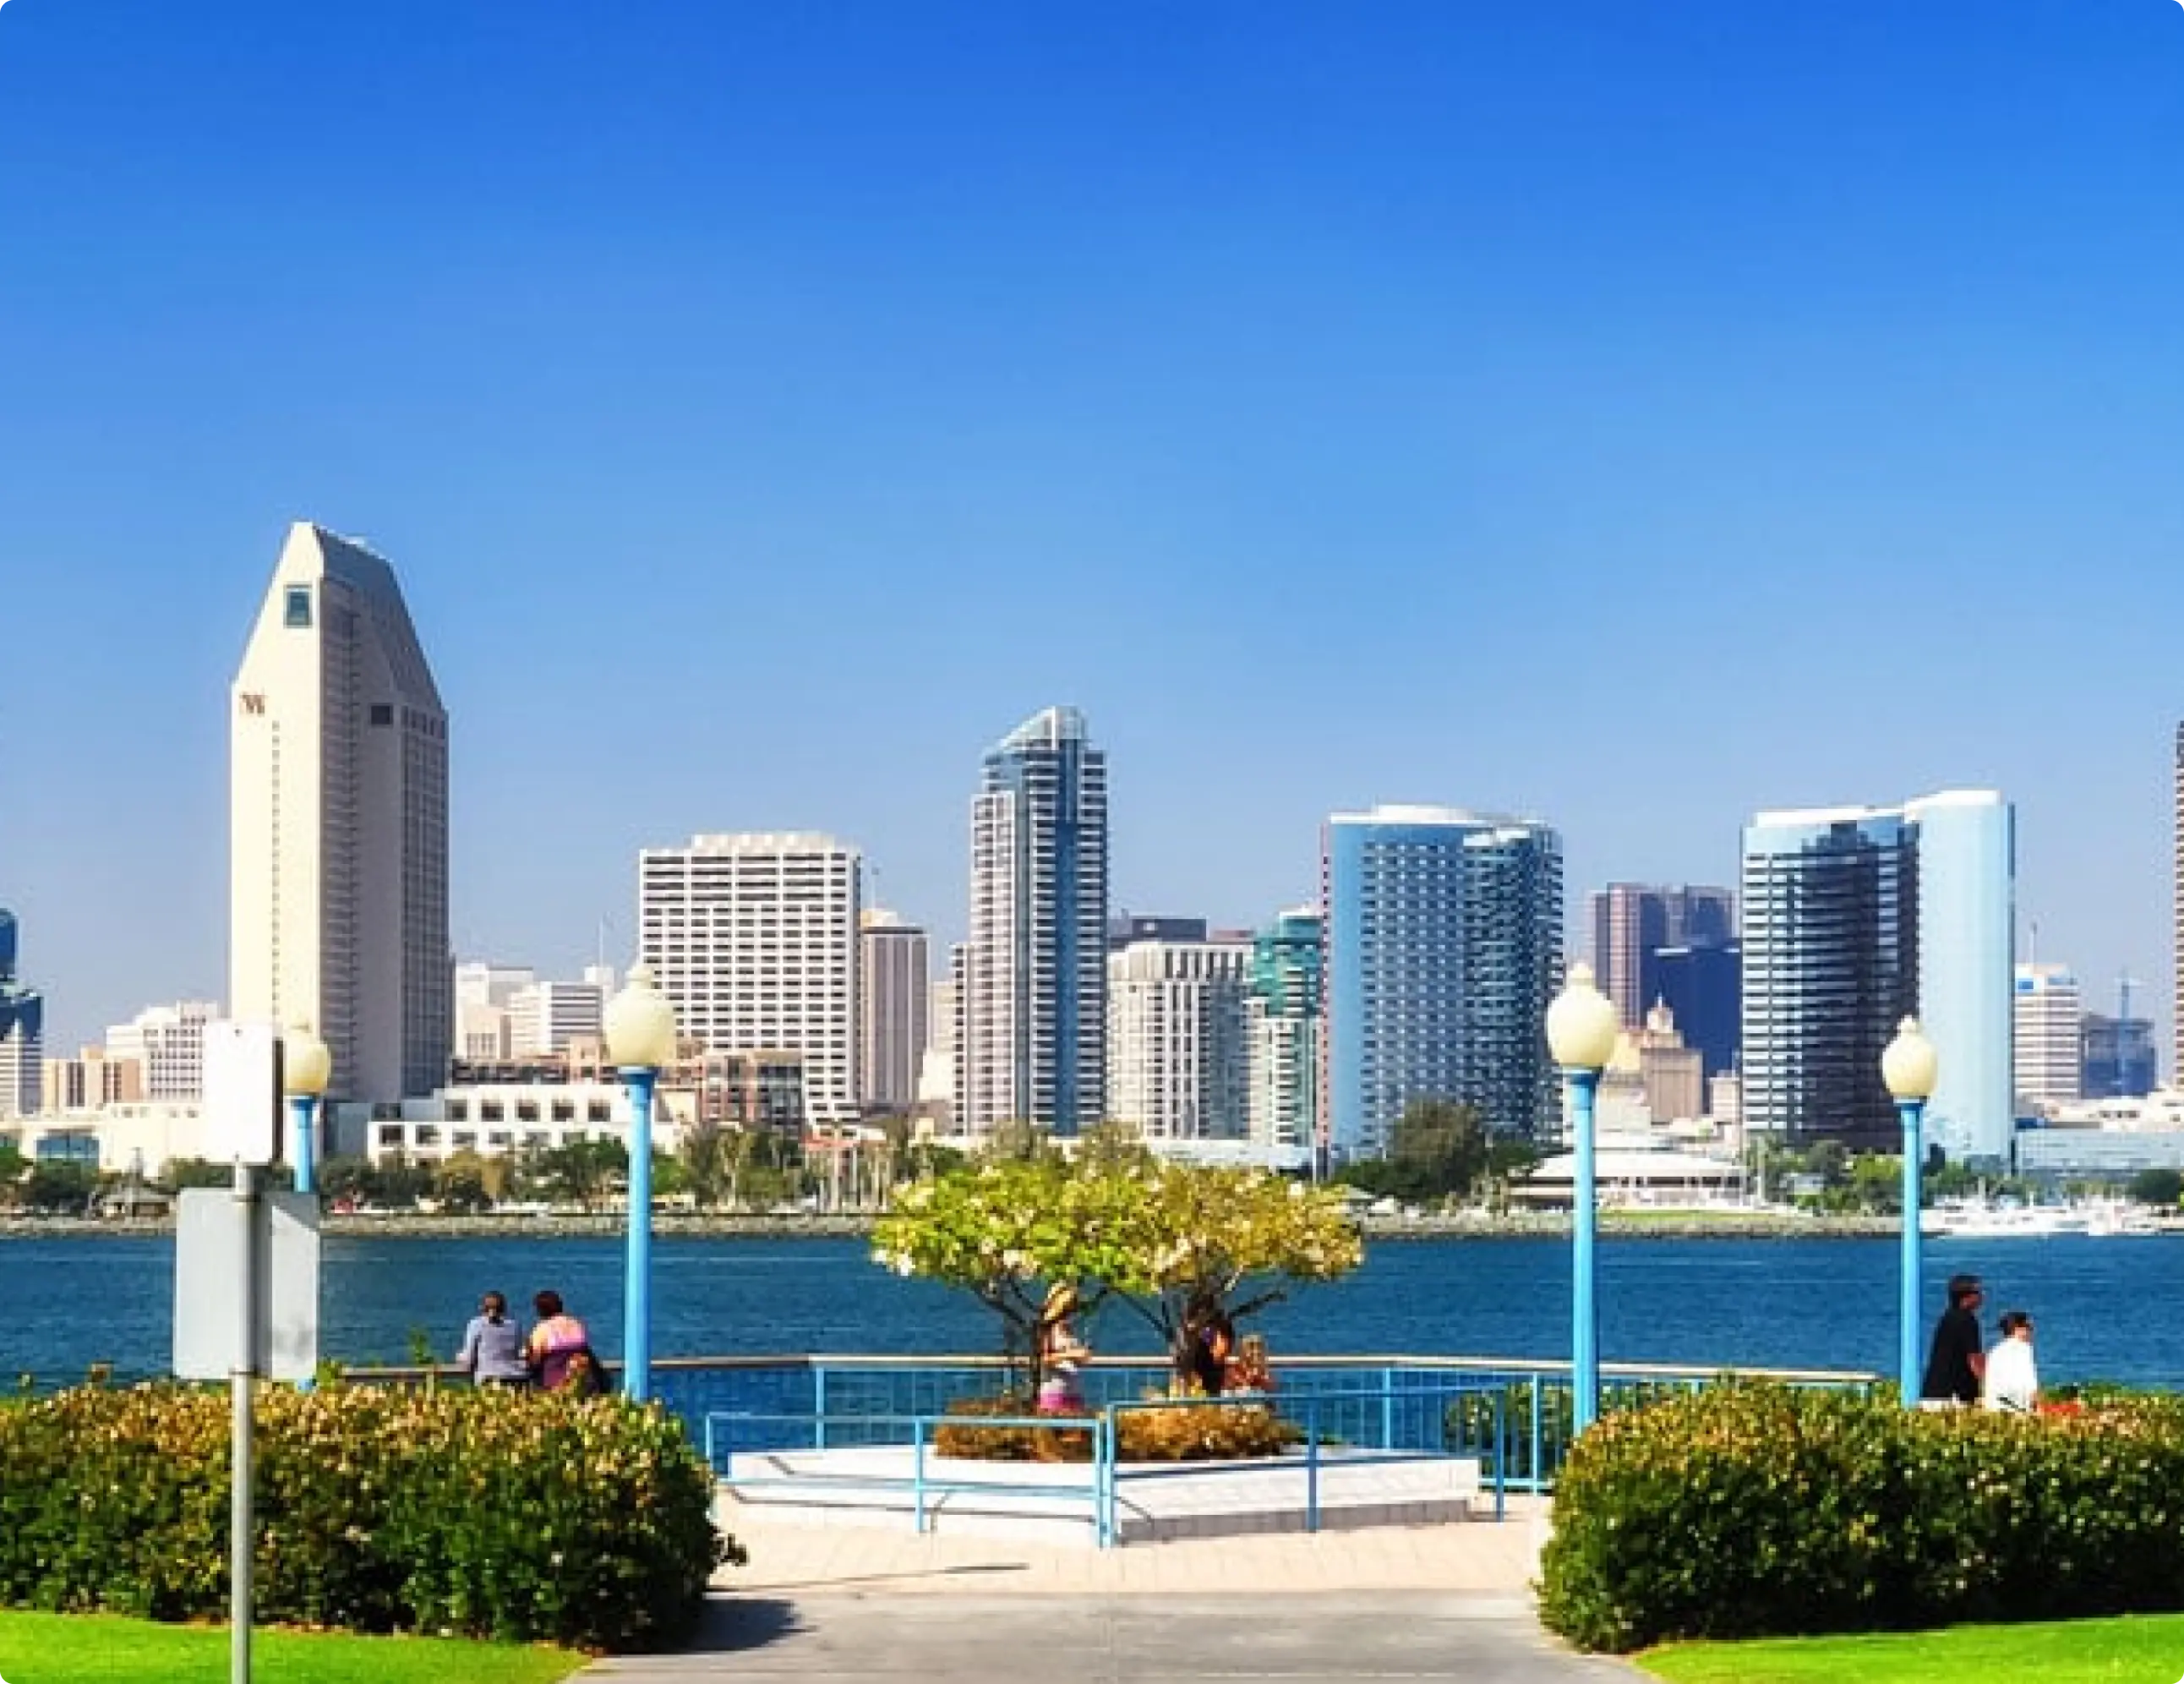 San Diego city